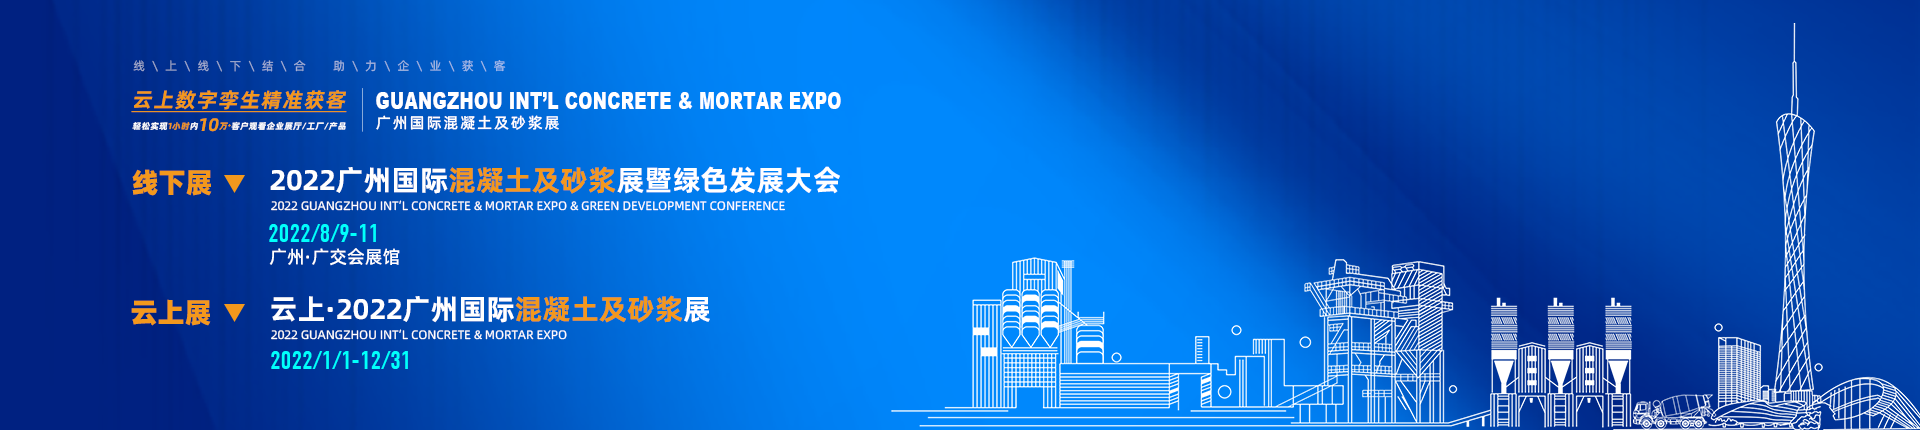 2022 Guangzhou Int'l Concrete & Mortar Expo & Green Development Conference